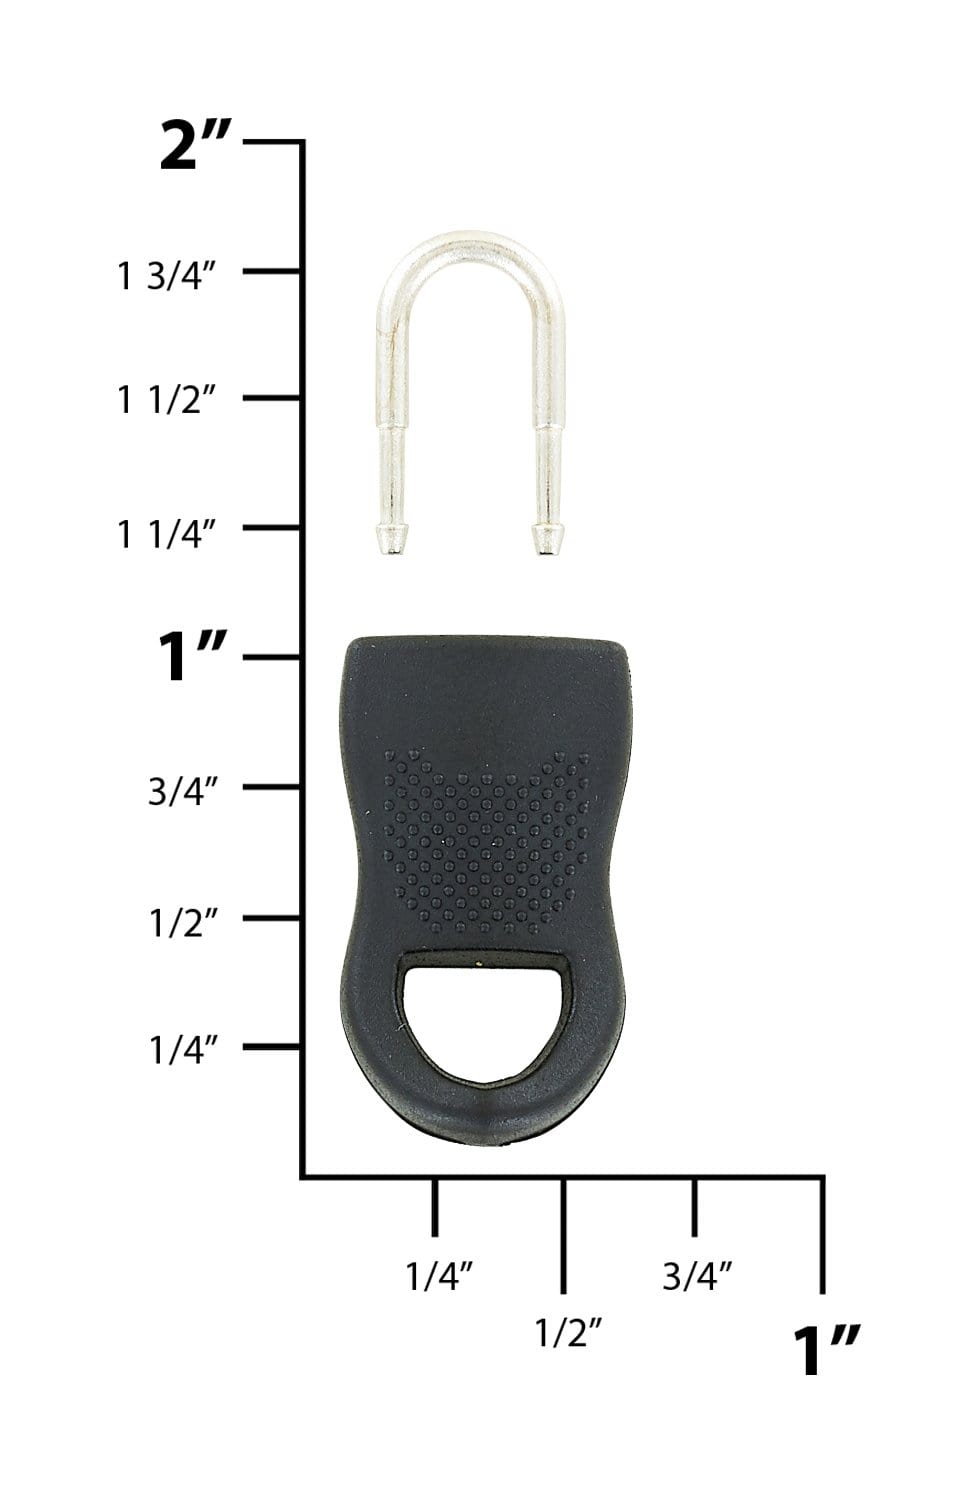  SEWACC 10pcs Detachable Zipper Pull Jacket Zipper Luggage  Zipper Pulls Separating Zippers Zipper Mend Fixer Coil Zipper DIY Craft  Zipper Trouser Craft Zipper Small Hole Zinc Alloy Coat